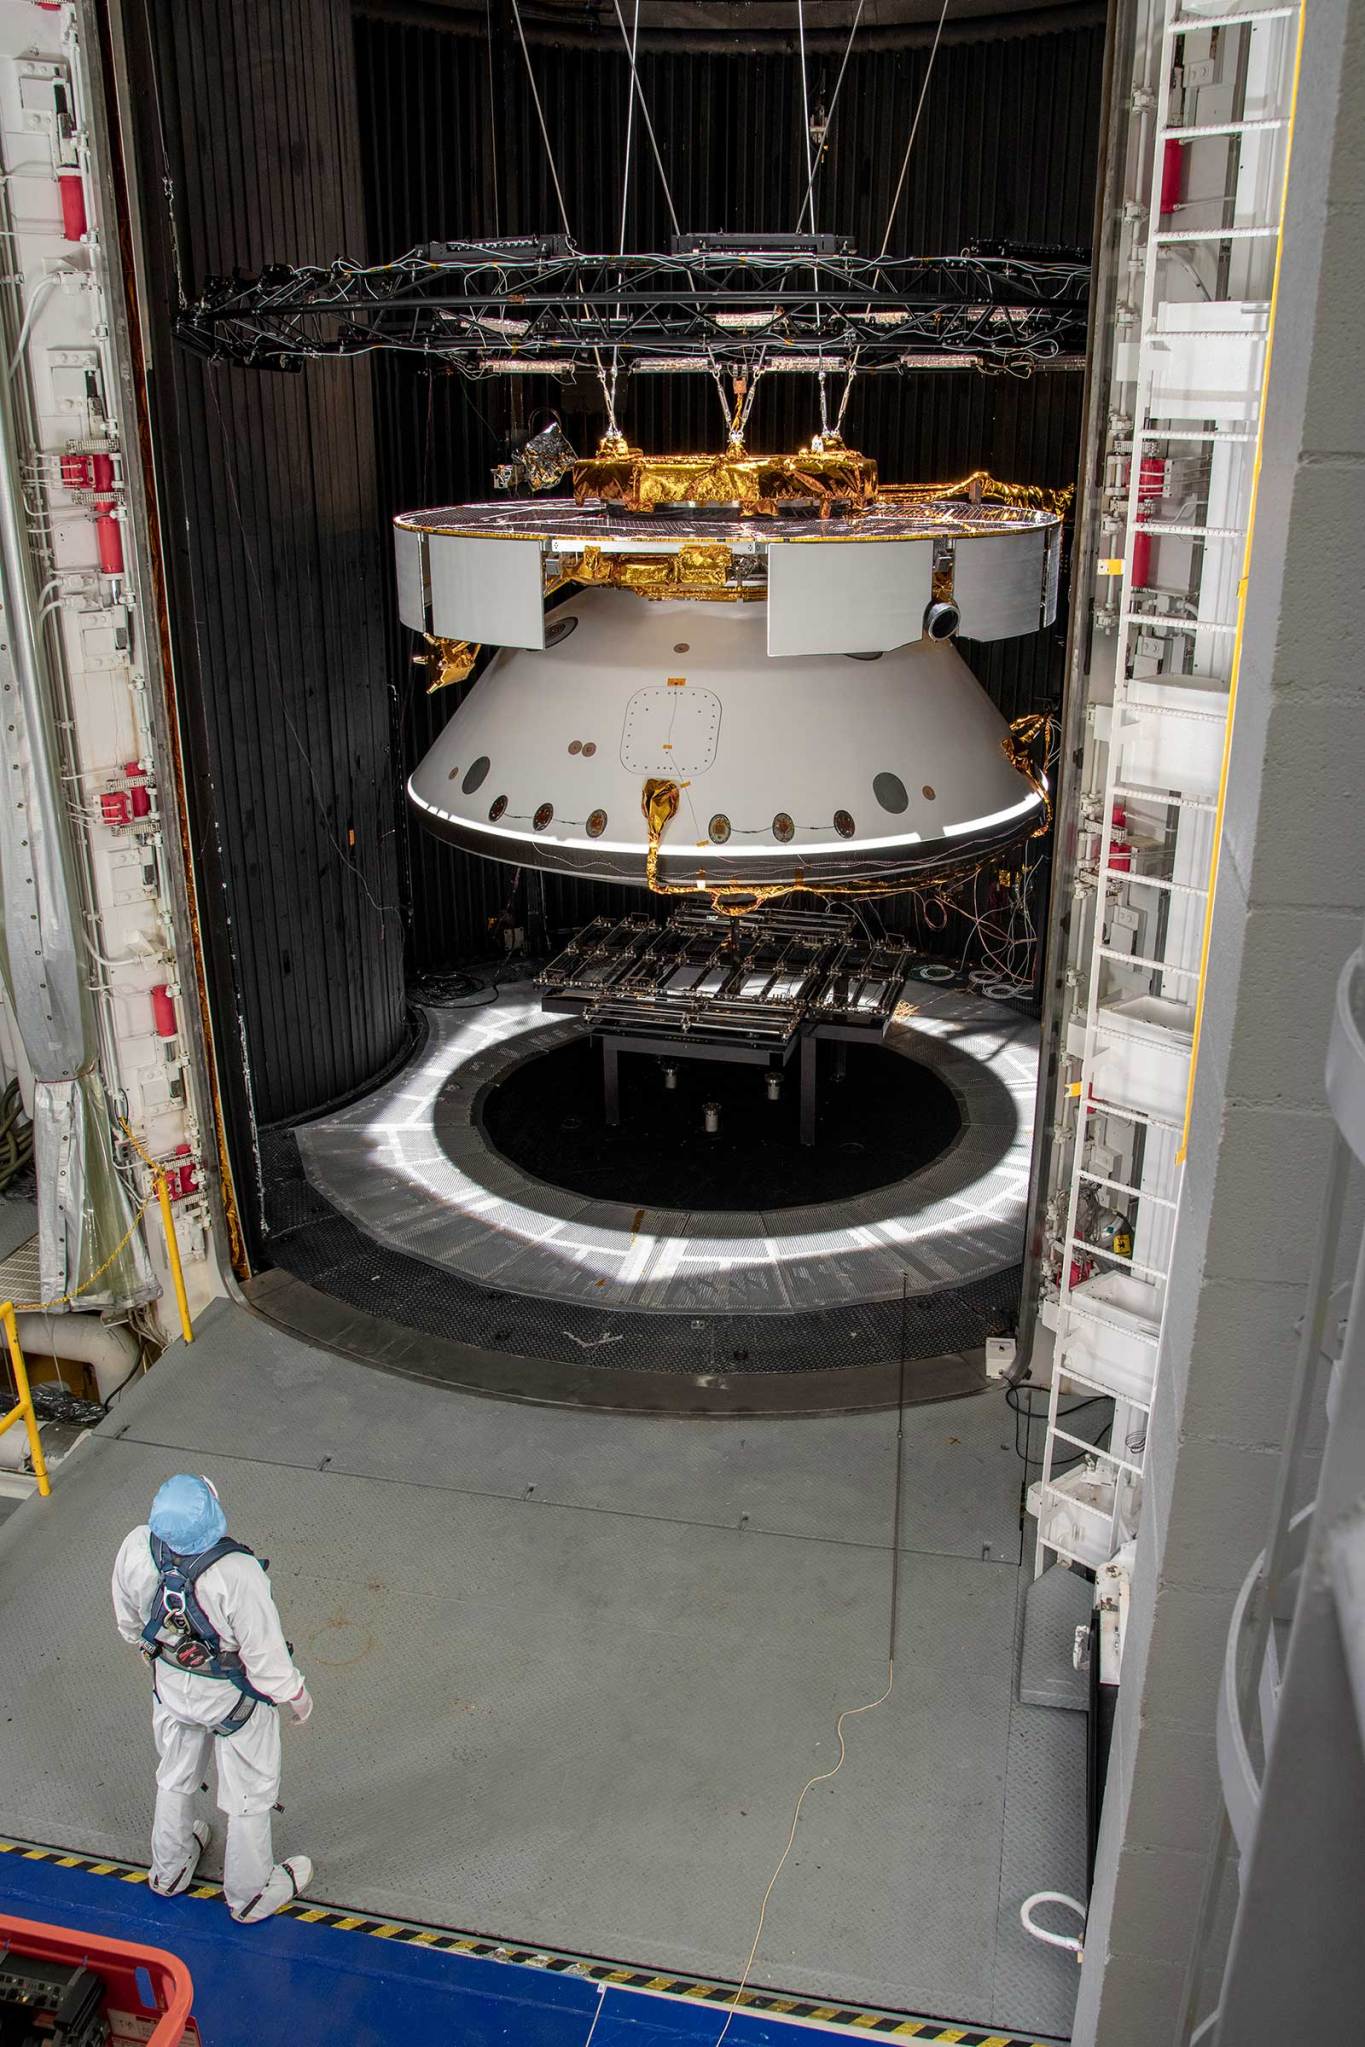 Engineer inspecting the Mars 2020 spacecraft